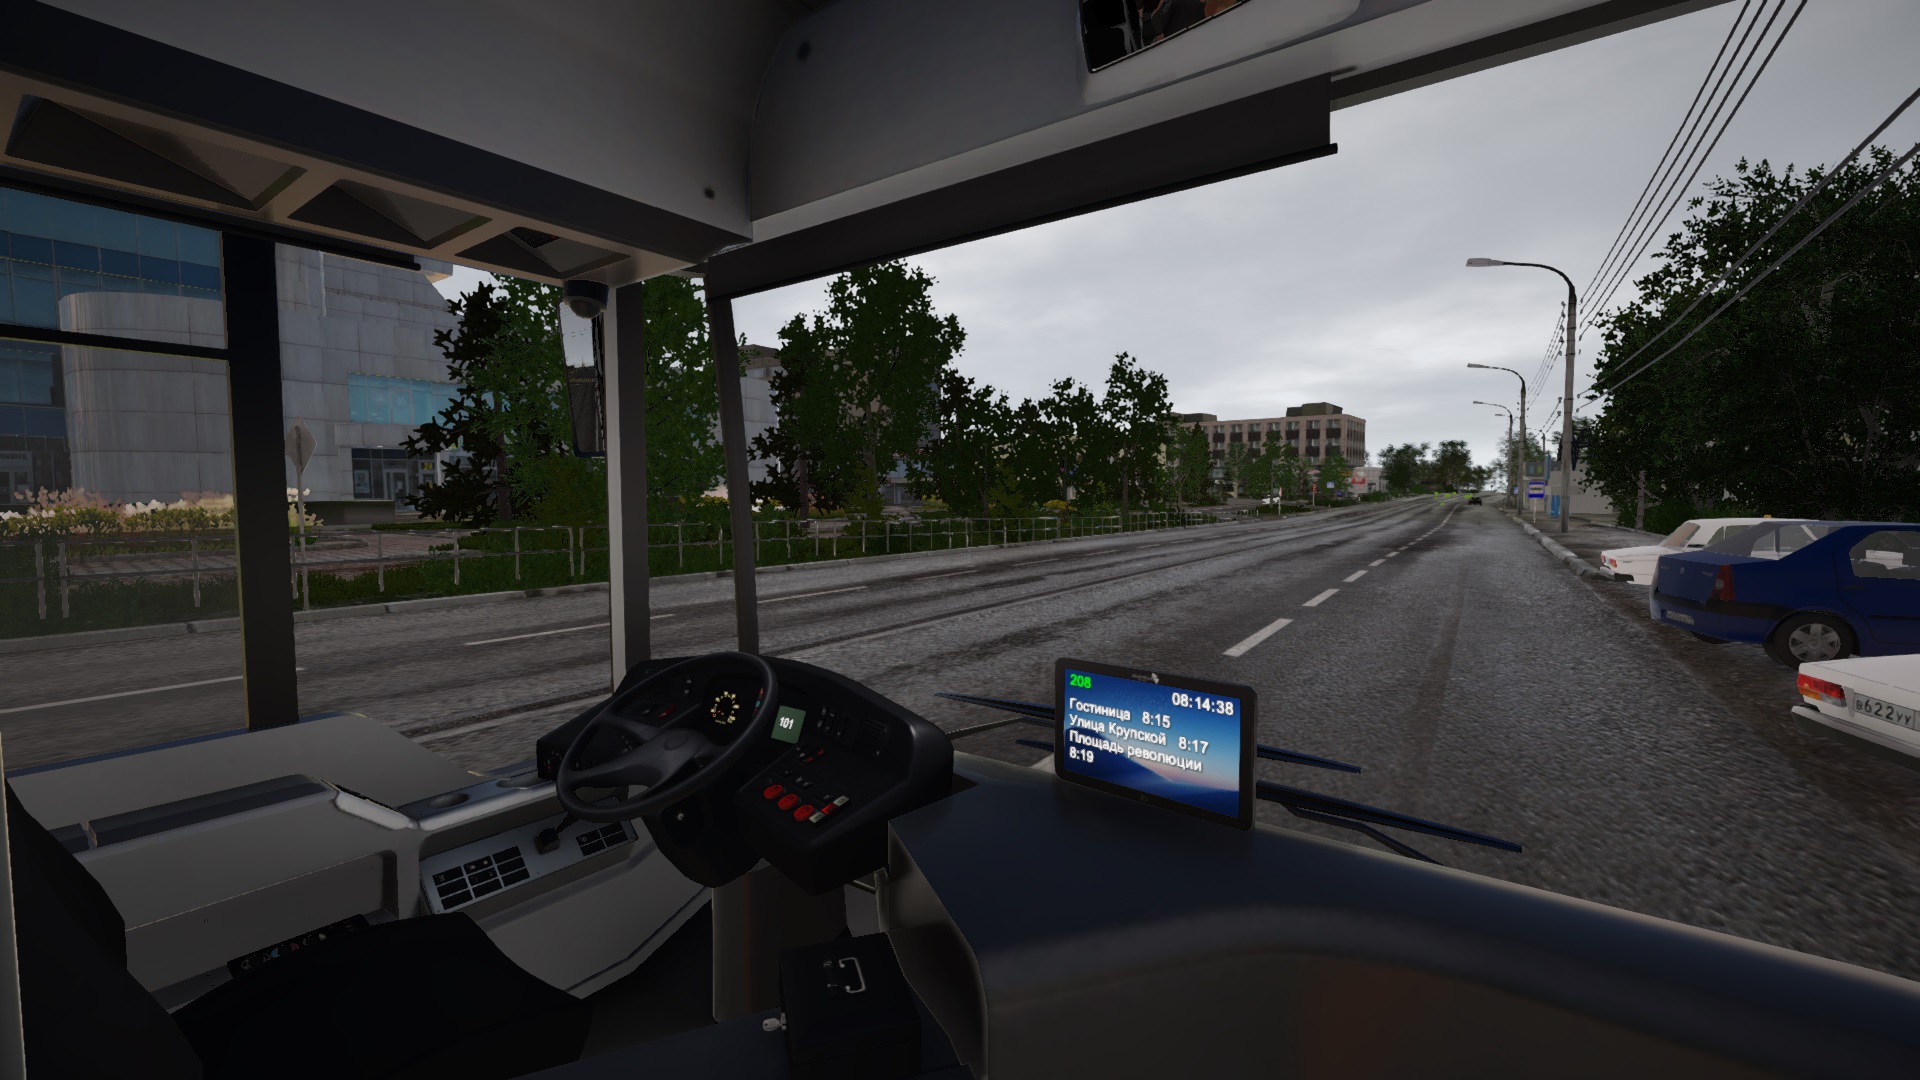 Bus Driver Simulator 2023 for apple instal free